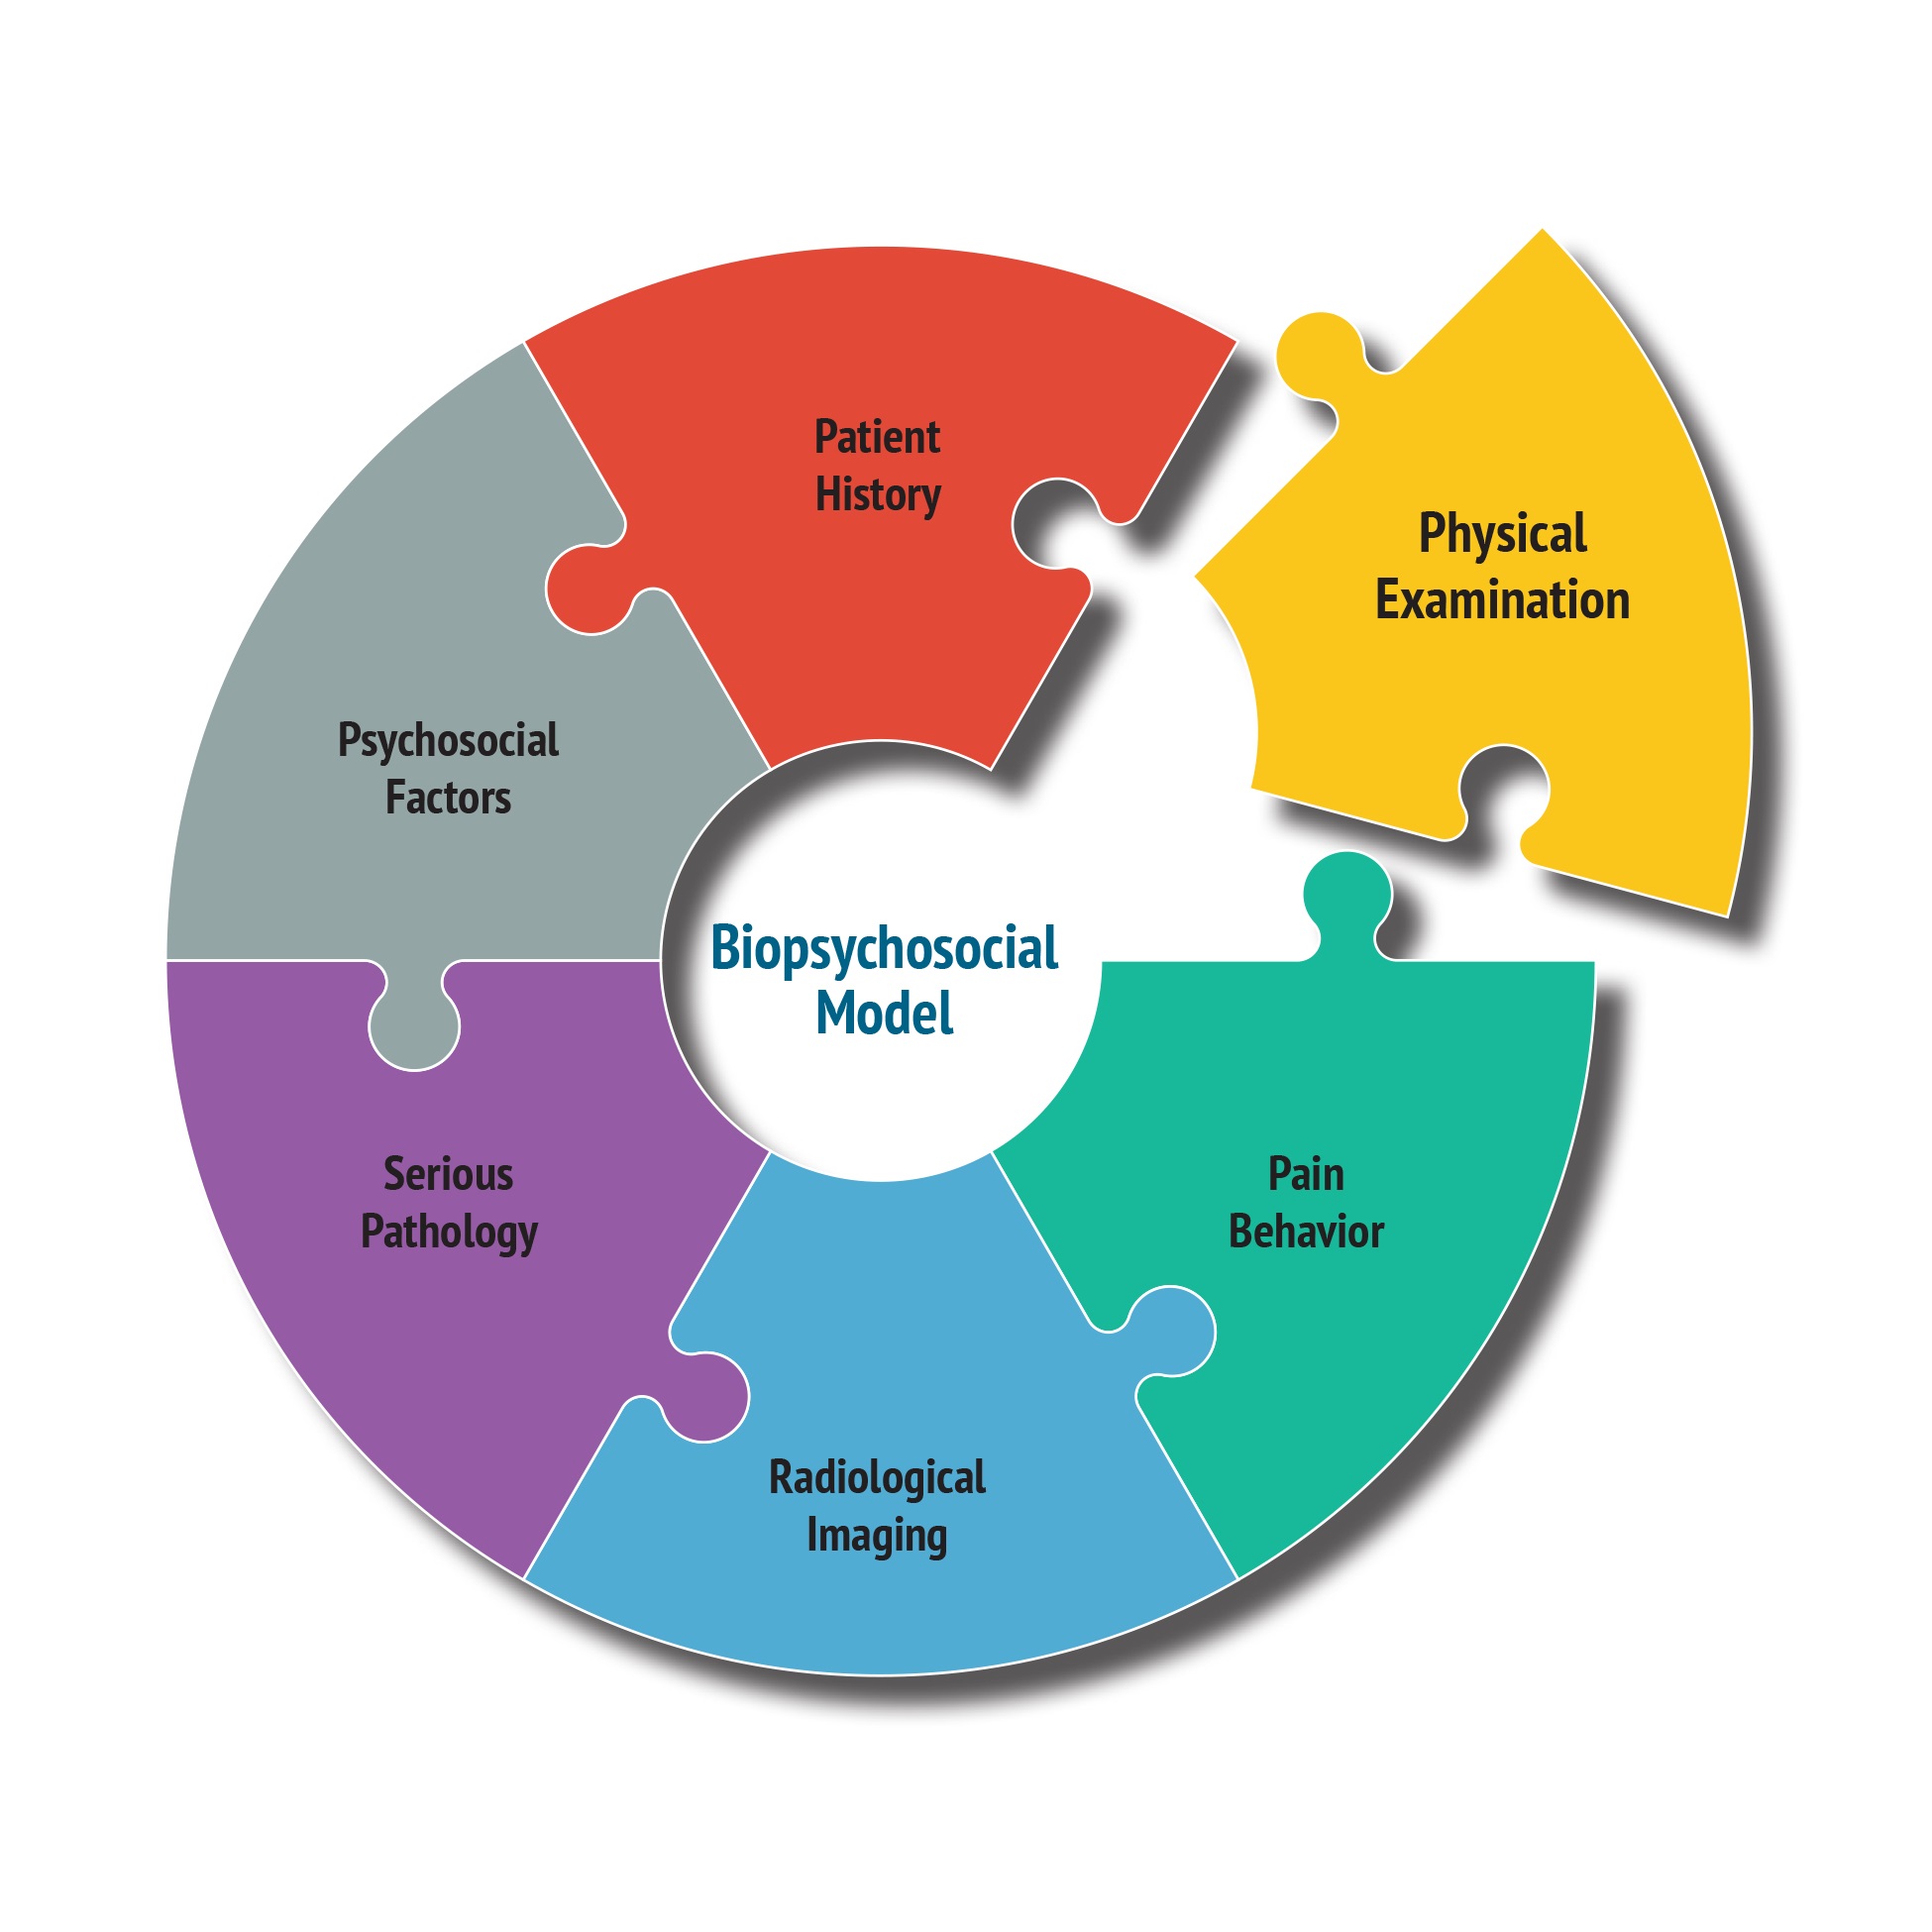 Biopsychosocial Model